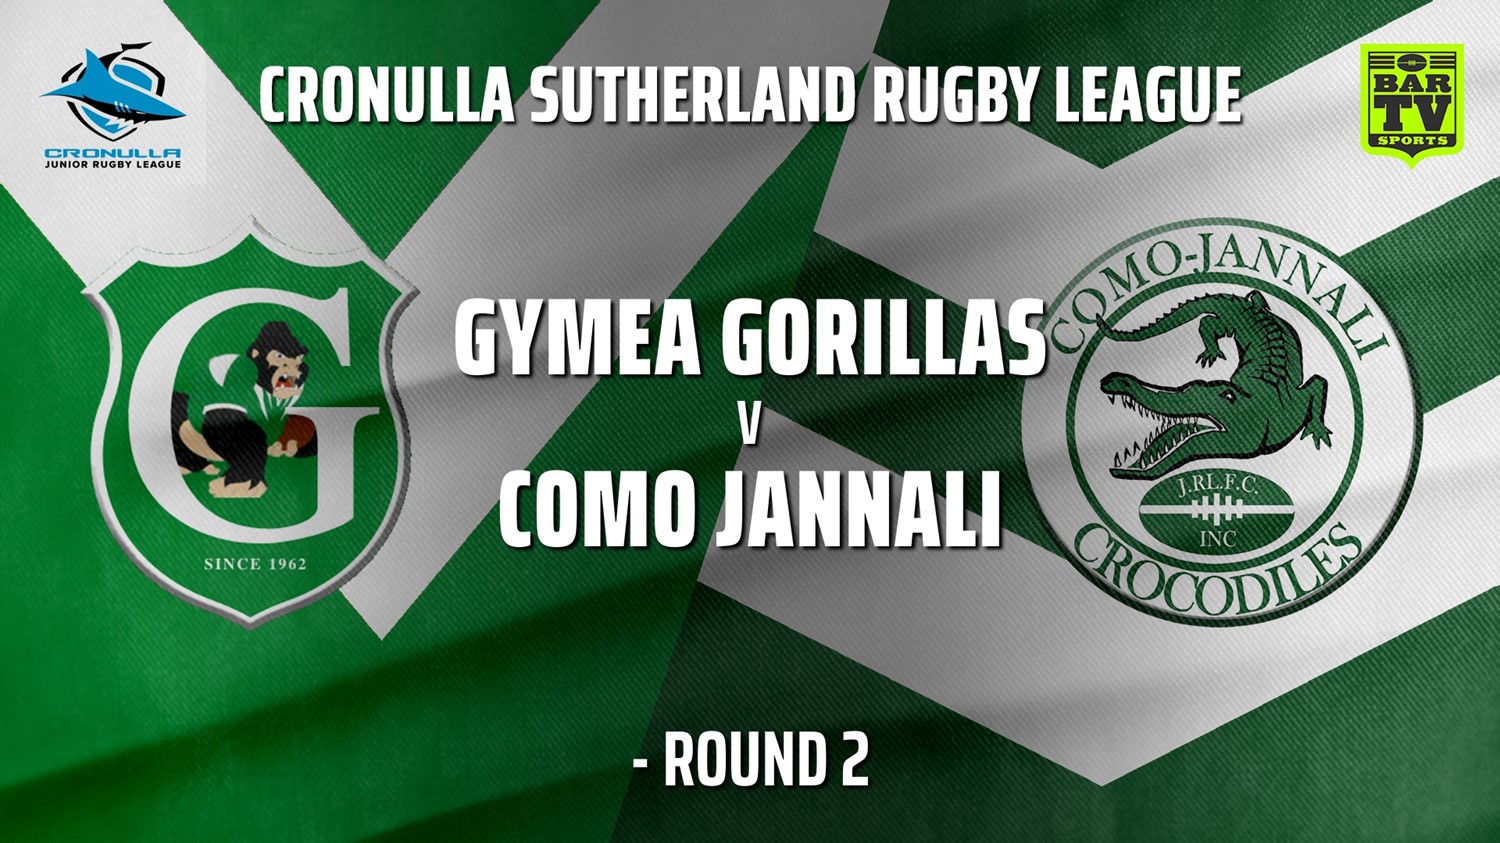 210508-Cronulla JRL Southern Open Age SILVER Round 2 - Gymea Gorillas v Como Jannali Crocodiles Minigame Slate Image